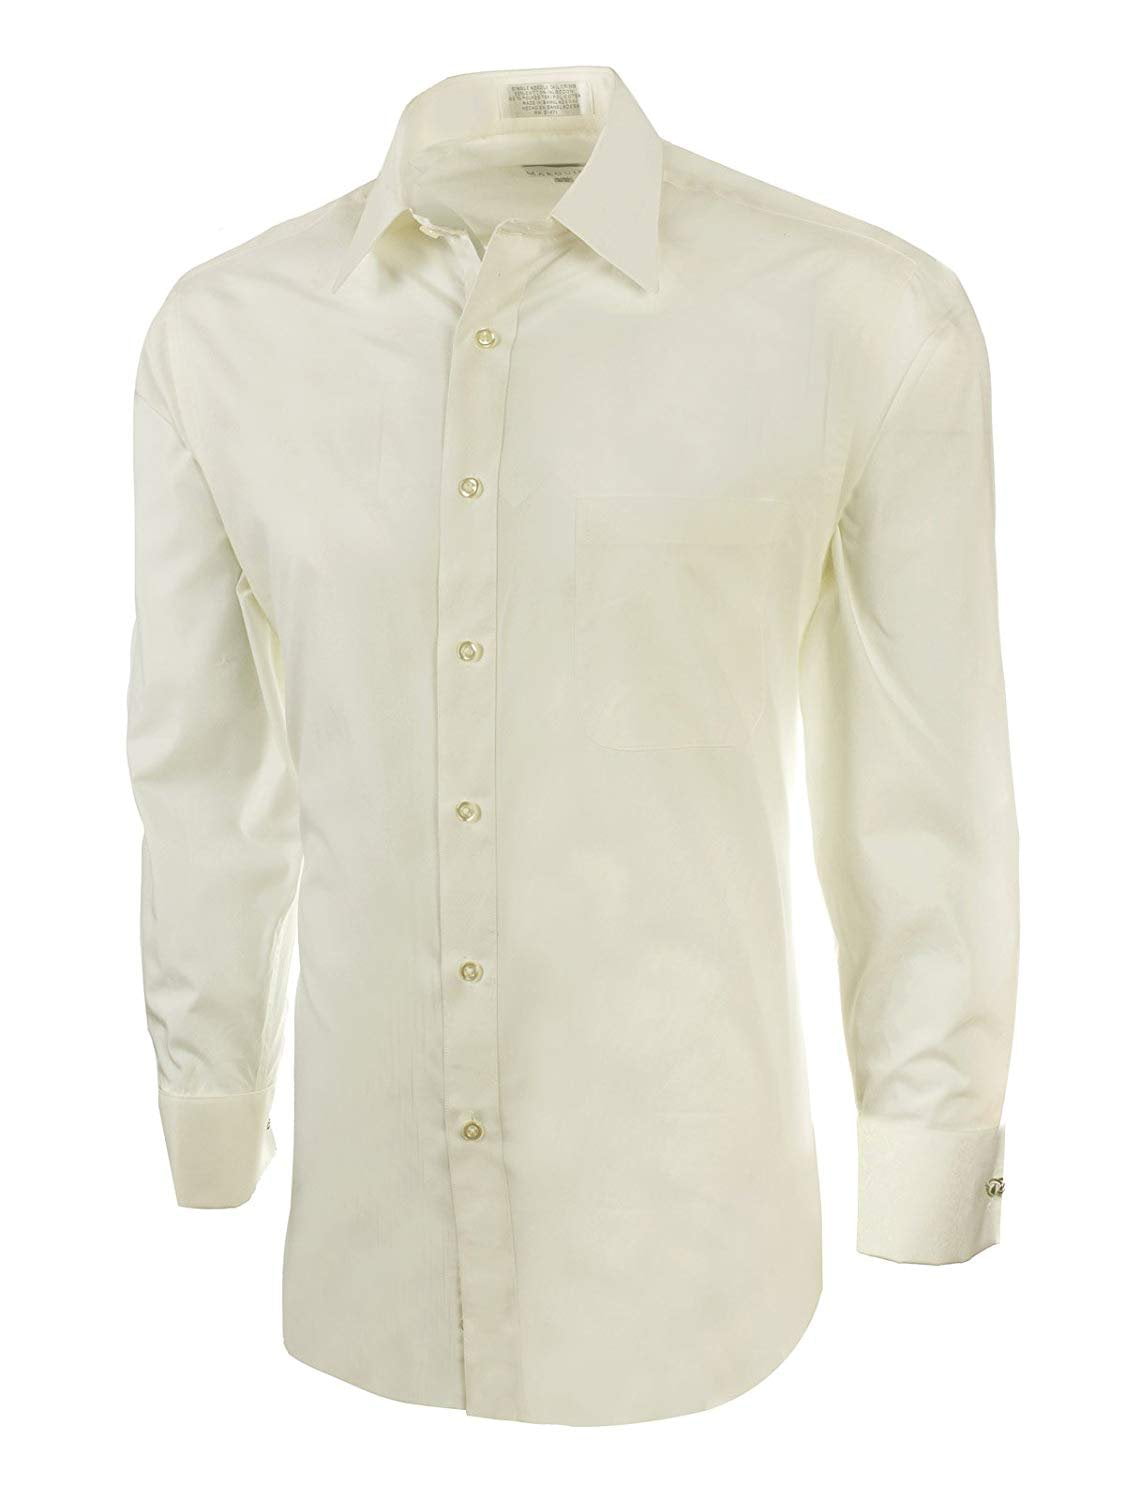 Marquis Men'S Slim Fit Solid Dress Shirt White Xx-Large 18-18.5 Neck 34/35 Sleev 